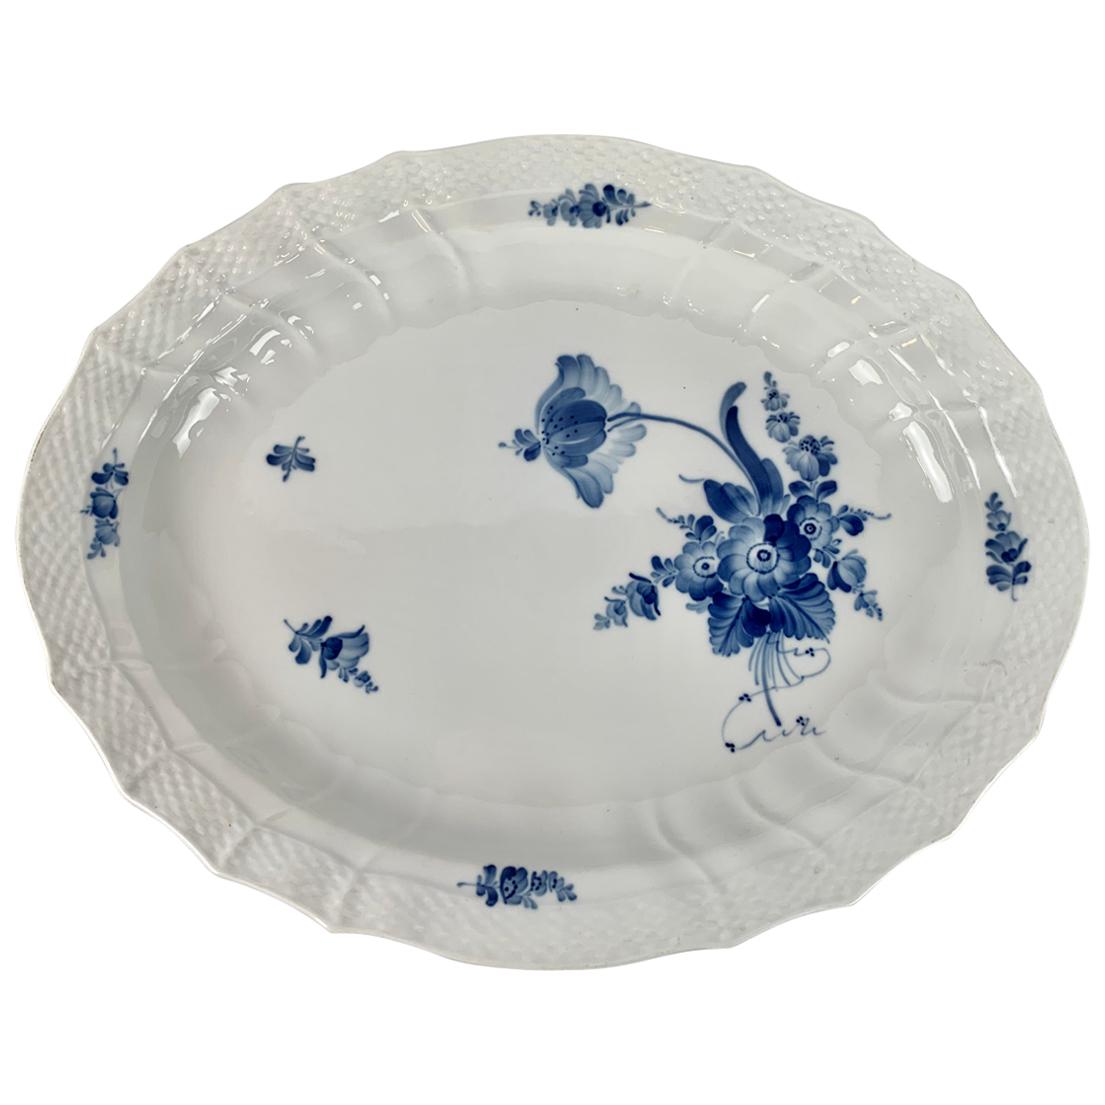  Royal Copenhagen Oval Porcelain Platter in the Blue Flower Pattern